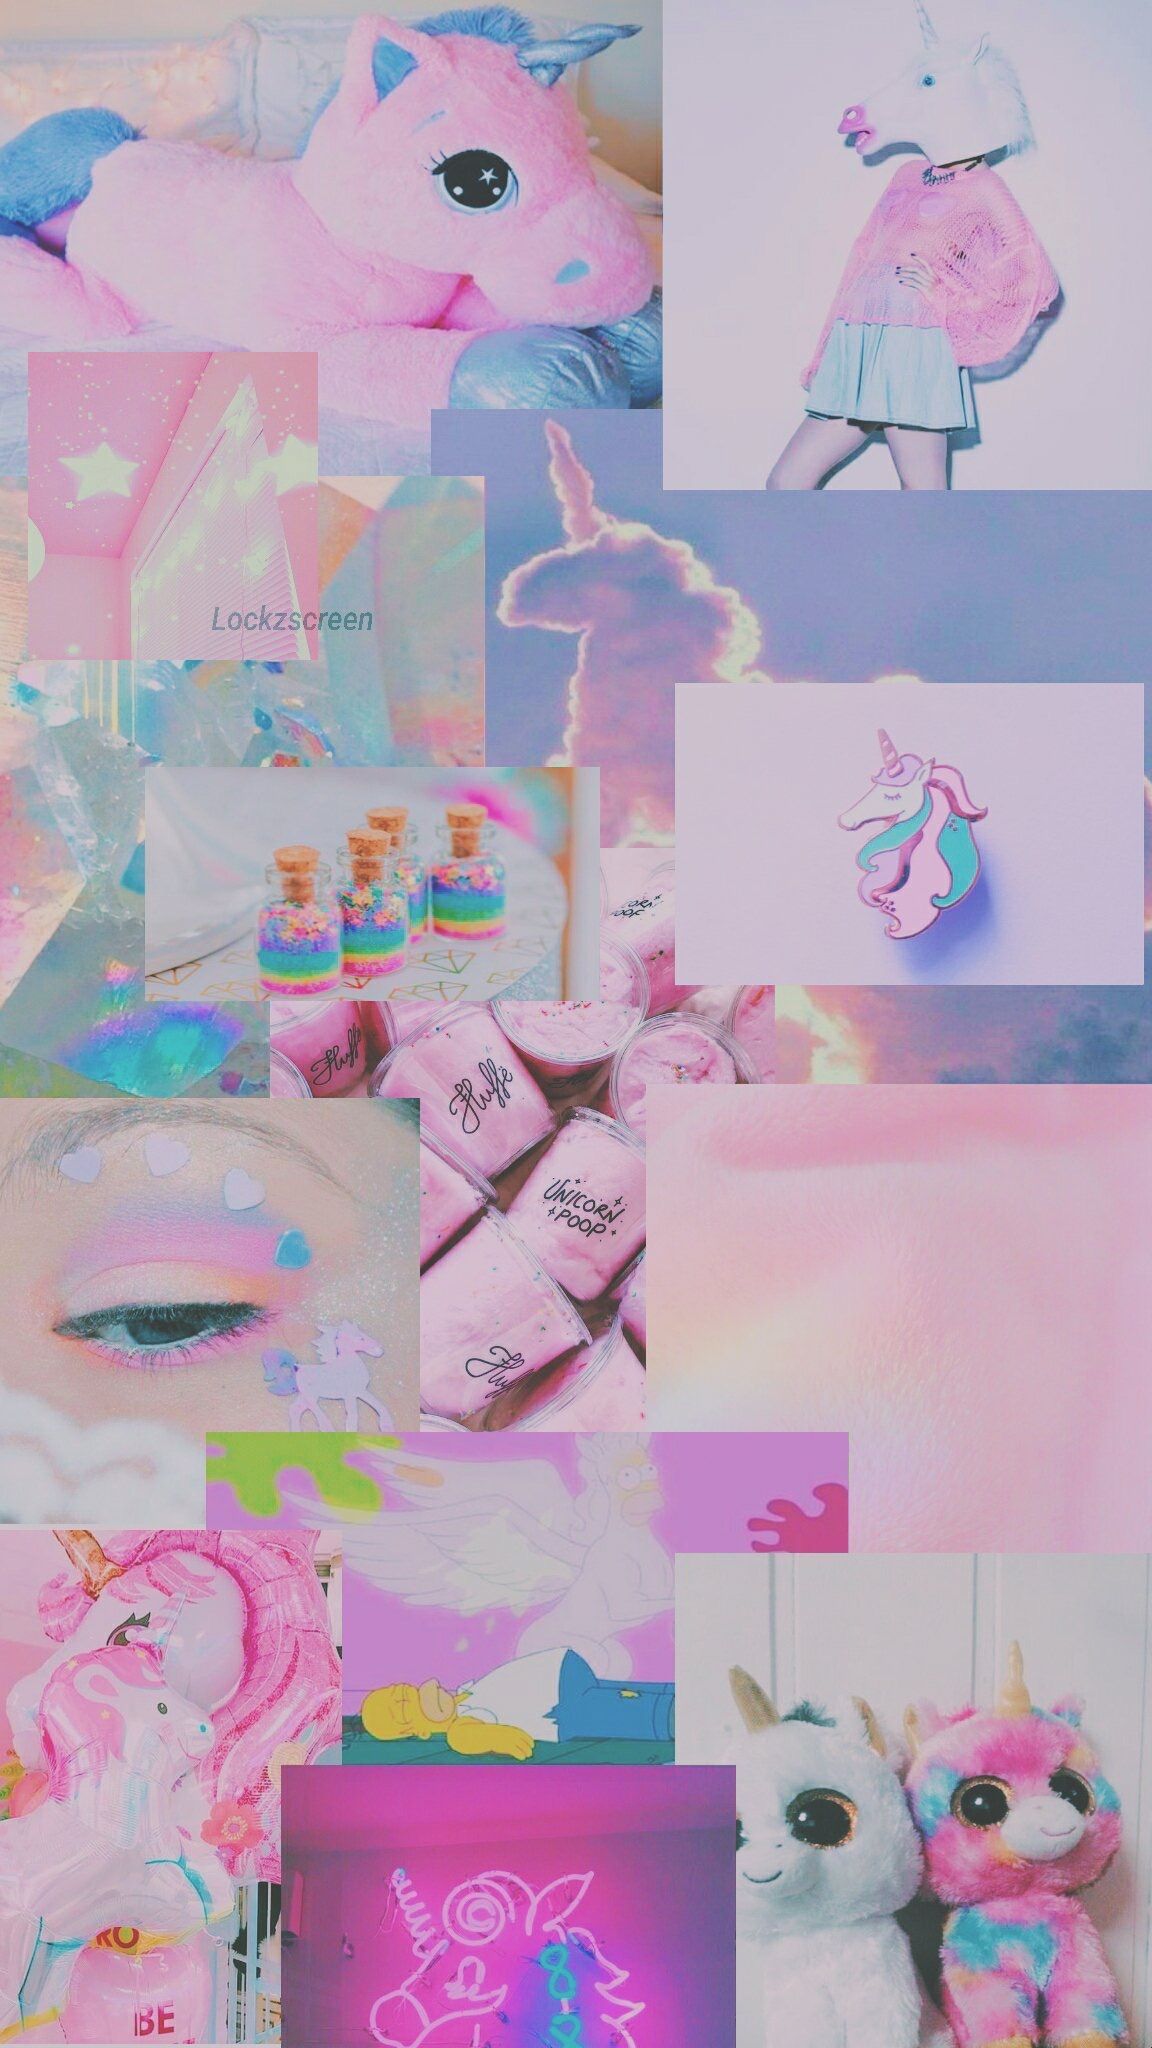 Aesthetic background with unicorn, rainbow, and pink themes - Unicorn